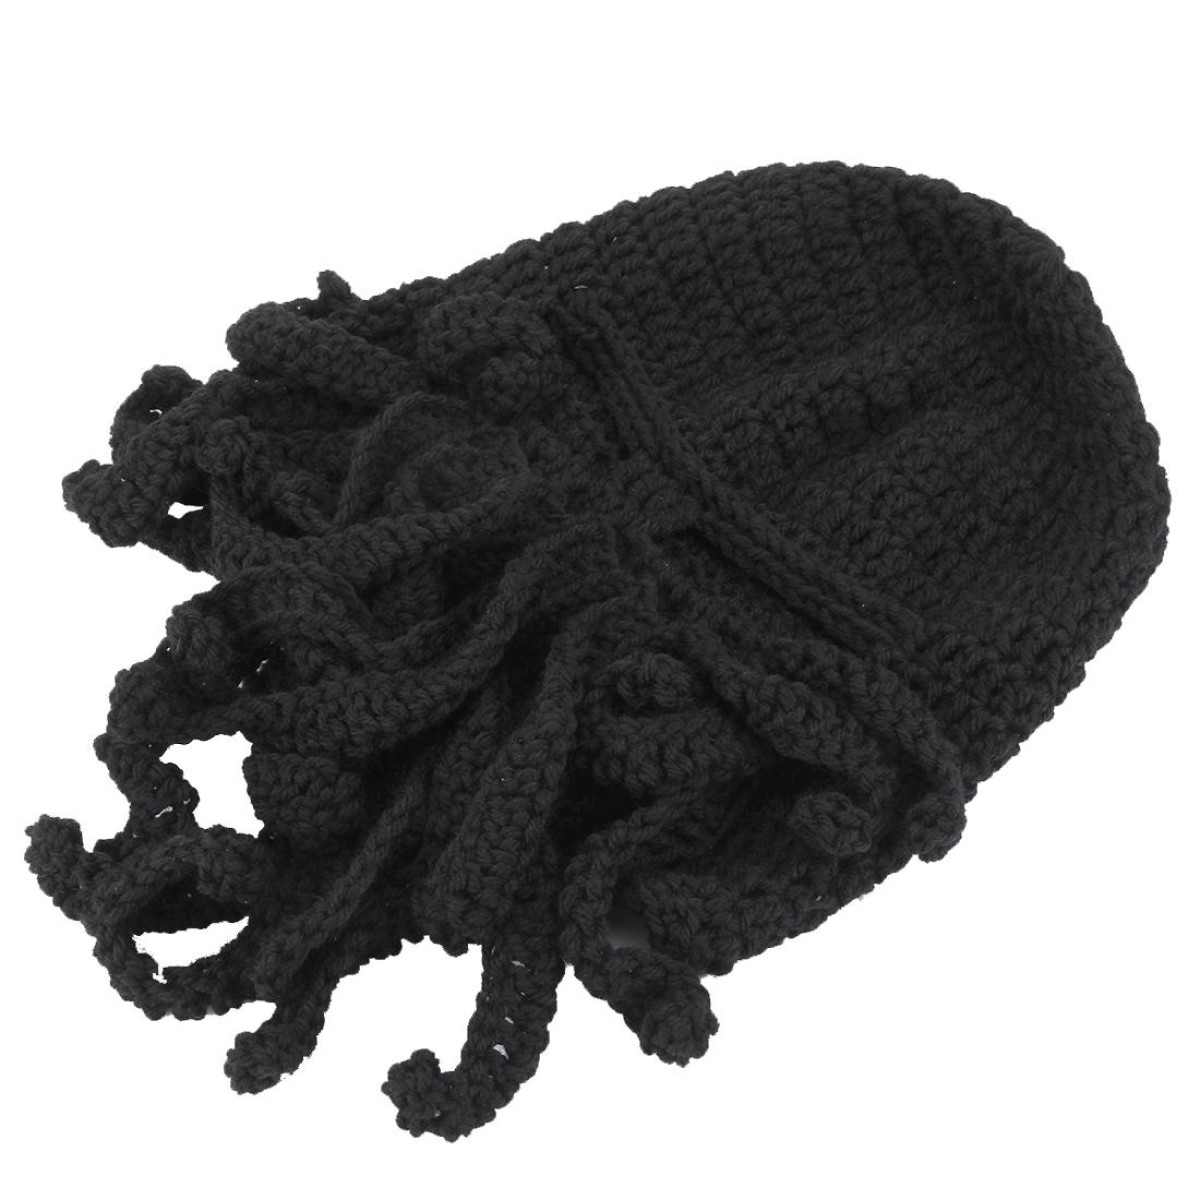 Amurleopard Unisex Barbarian Knit Beanie Octopus Tentacle Cap Winter Warm Face Mask Crochet Hat(Black)